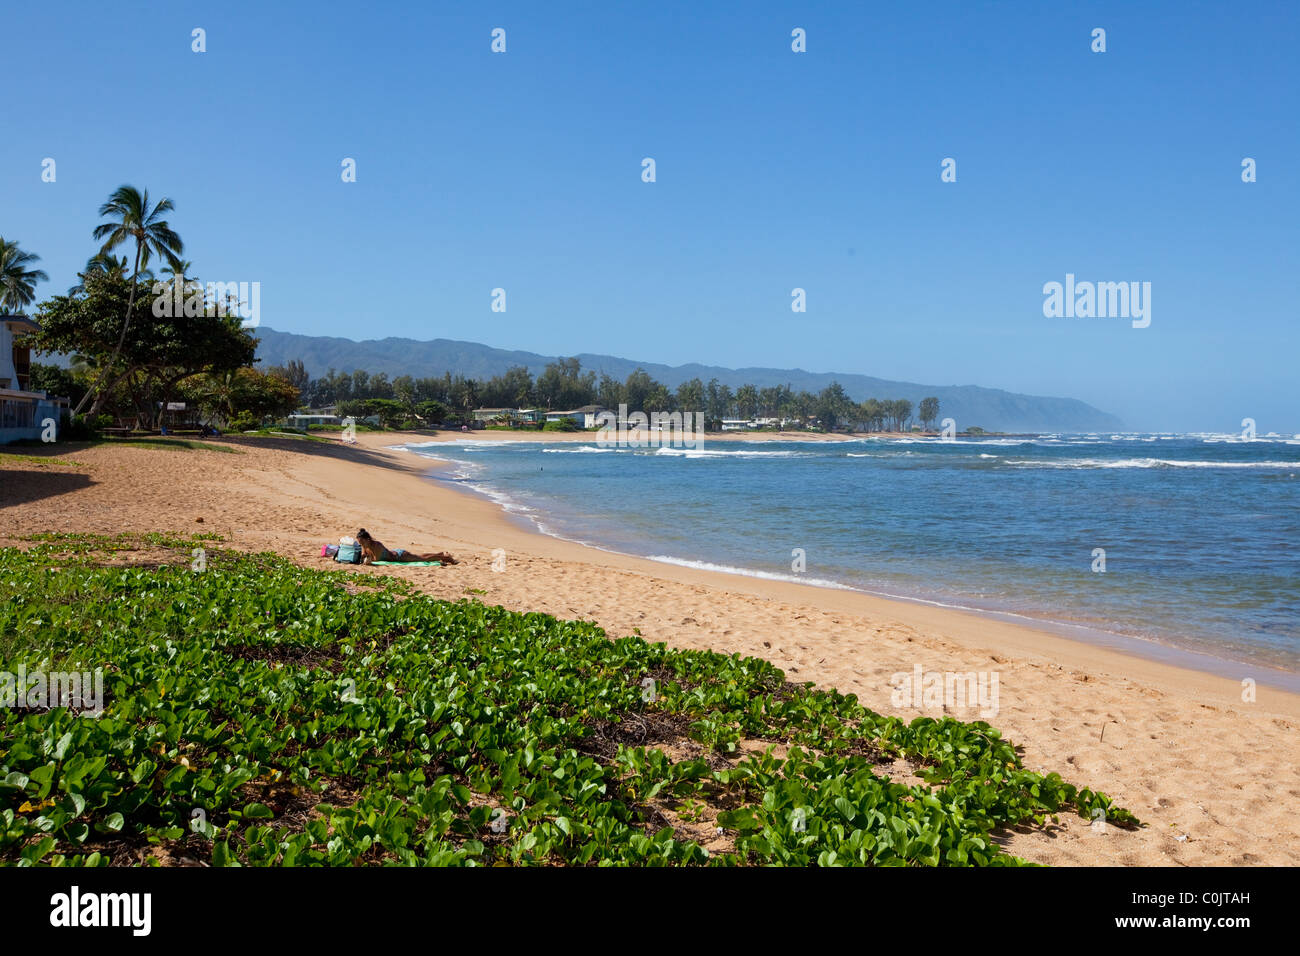 Haleiwa Ali'i Beach Park, North Shore, Oahu, Hawaii Stock Photo